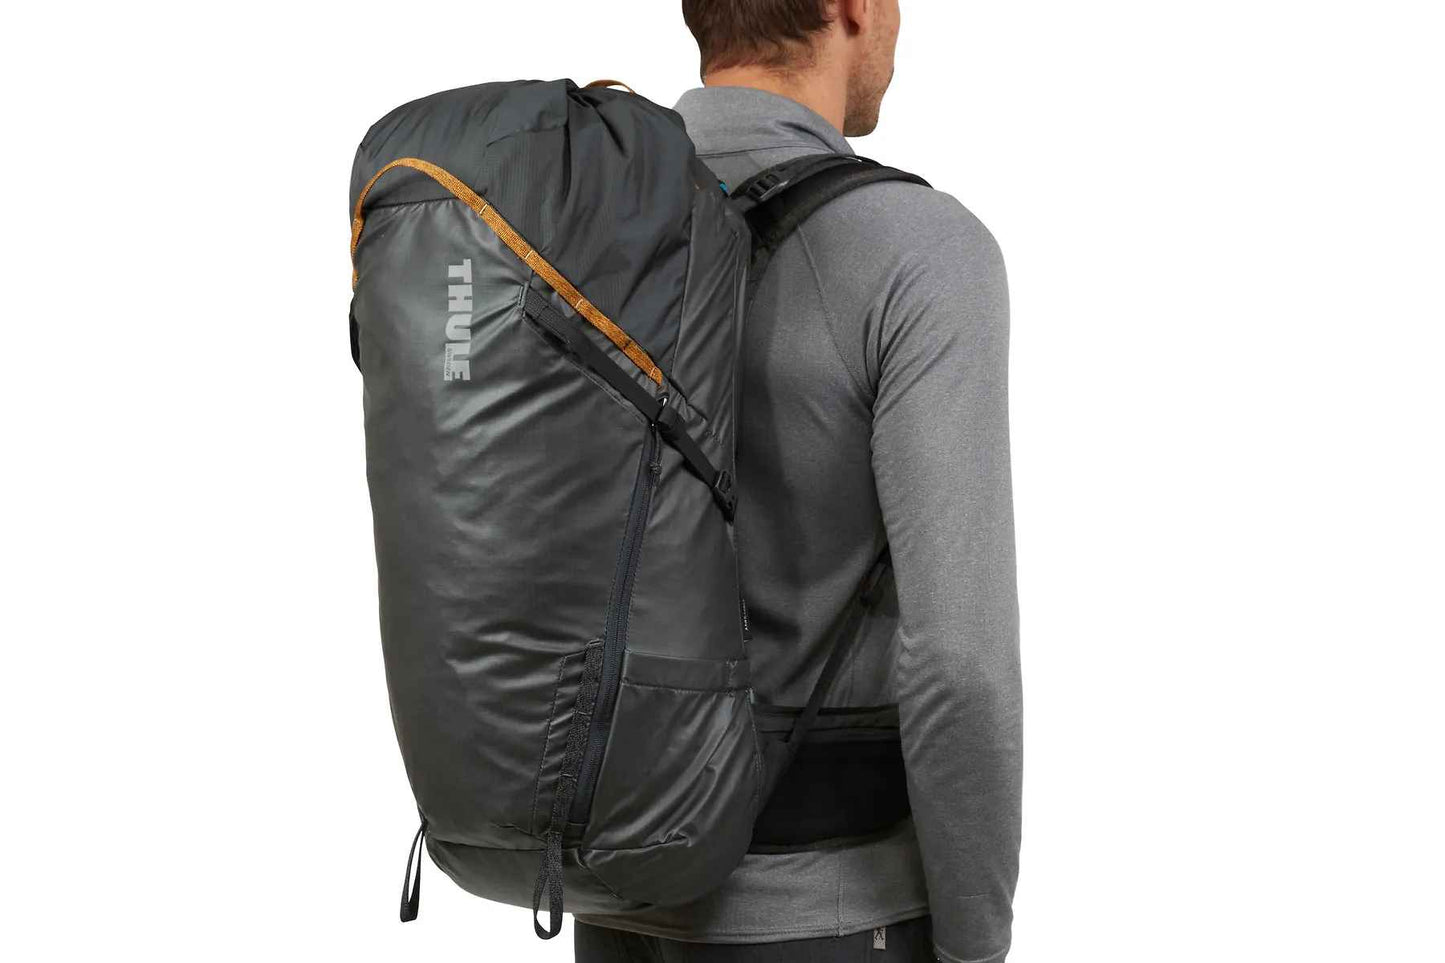 Hiking backpack Thule Stir 35L for men